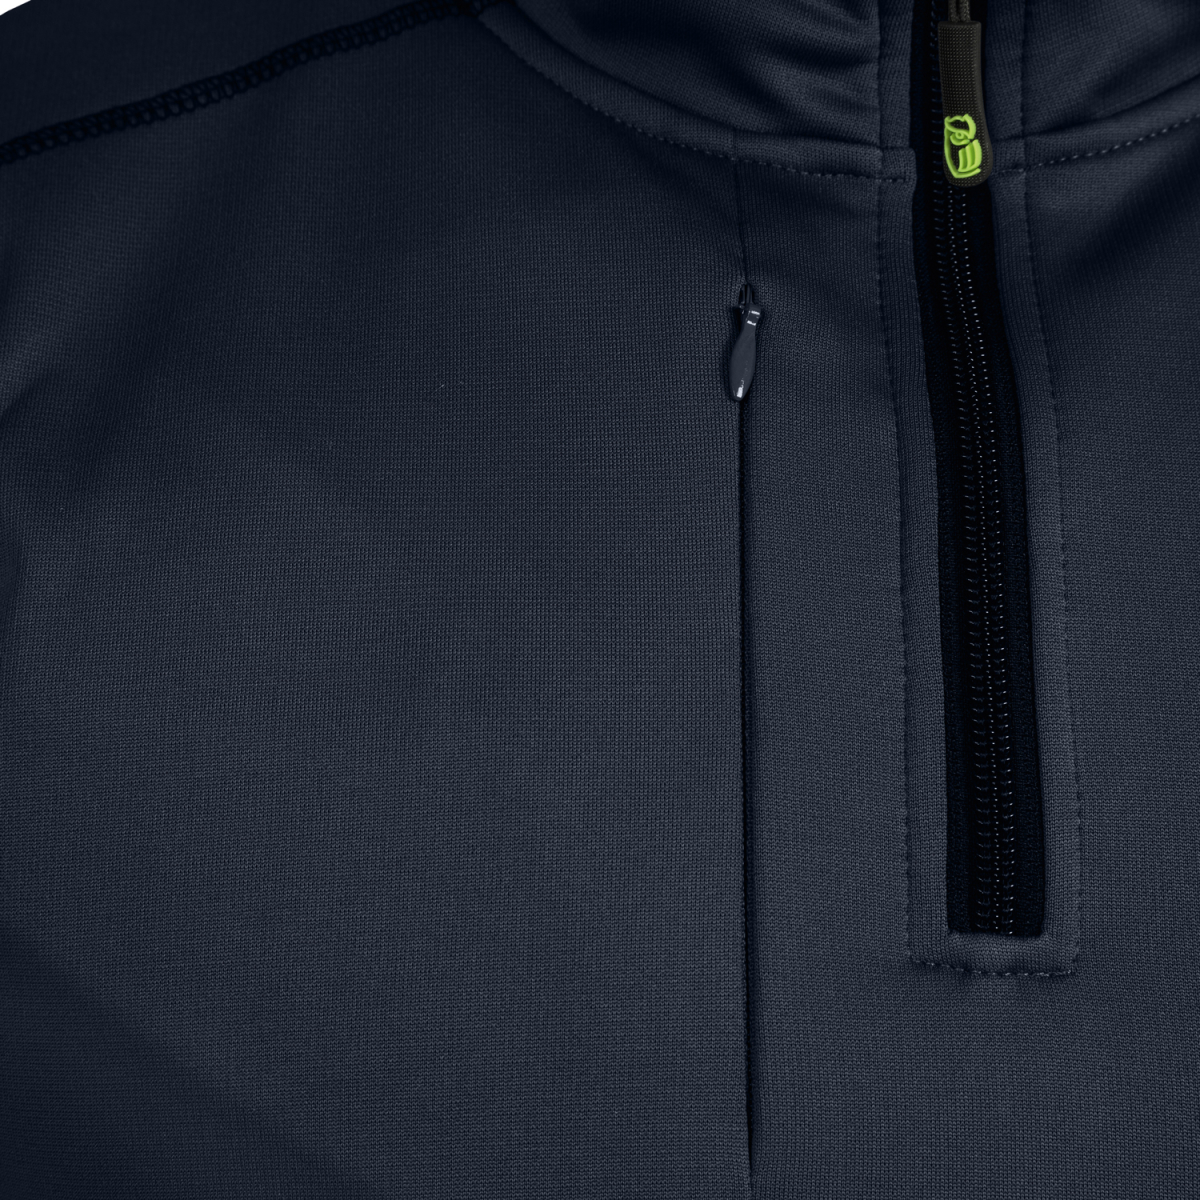 Leib Wächter Flex-Line Funktions-Shirt 1/4 ZIP Sweatshirt grau-schwarz Gr.S-5XL 